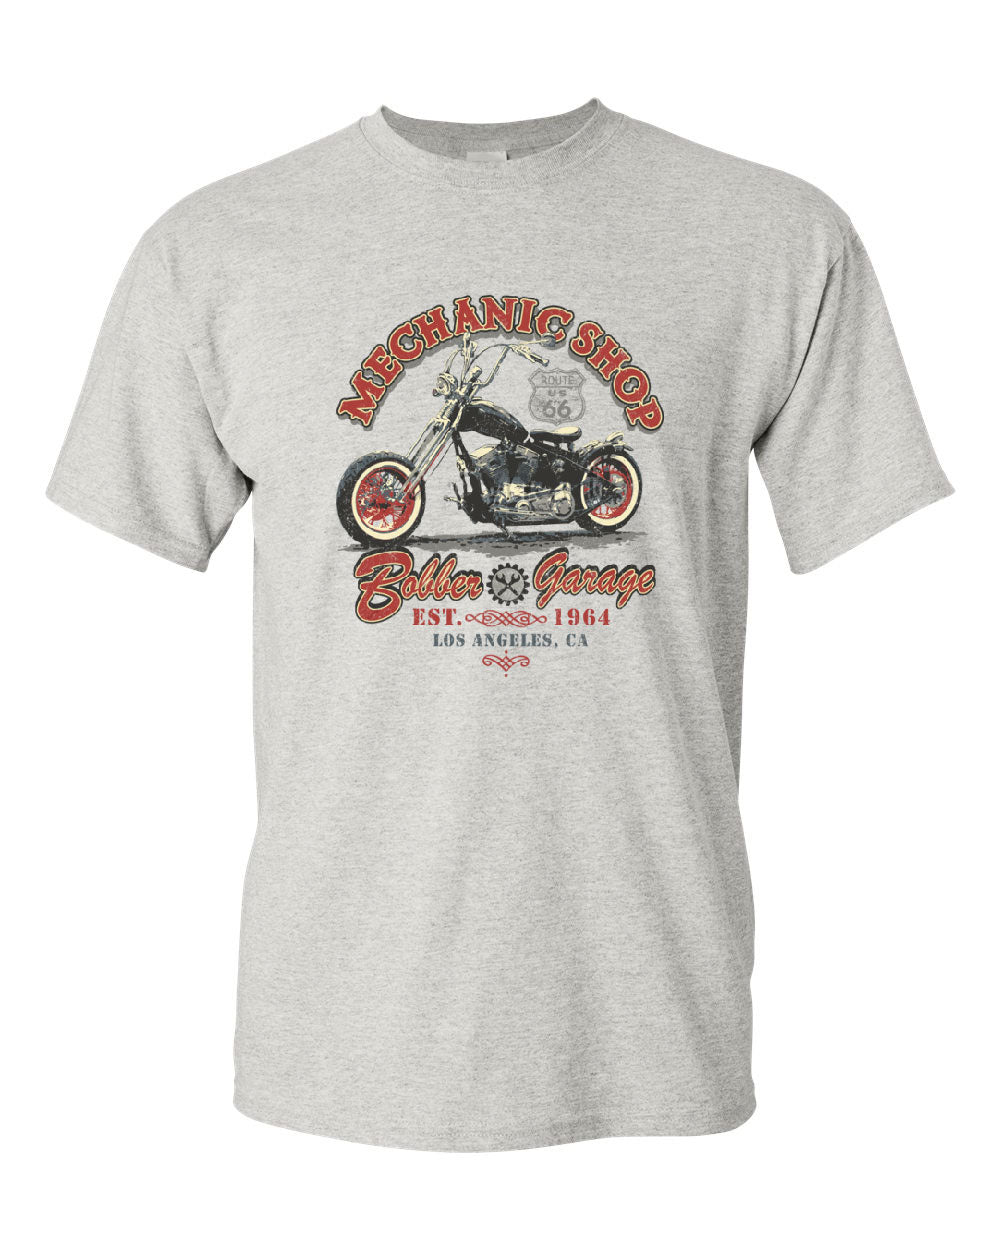 Mechanic Shop Bobber Garage T-Shirt Route 66 Retro Tee Shirt | eBay